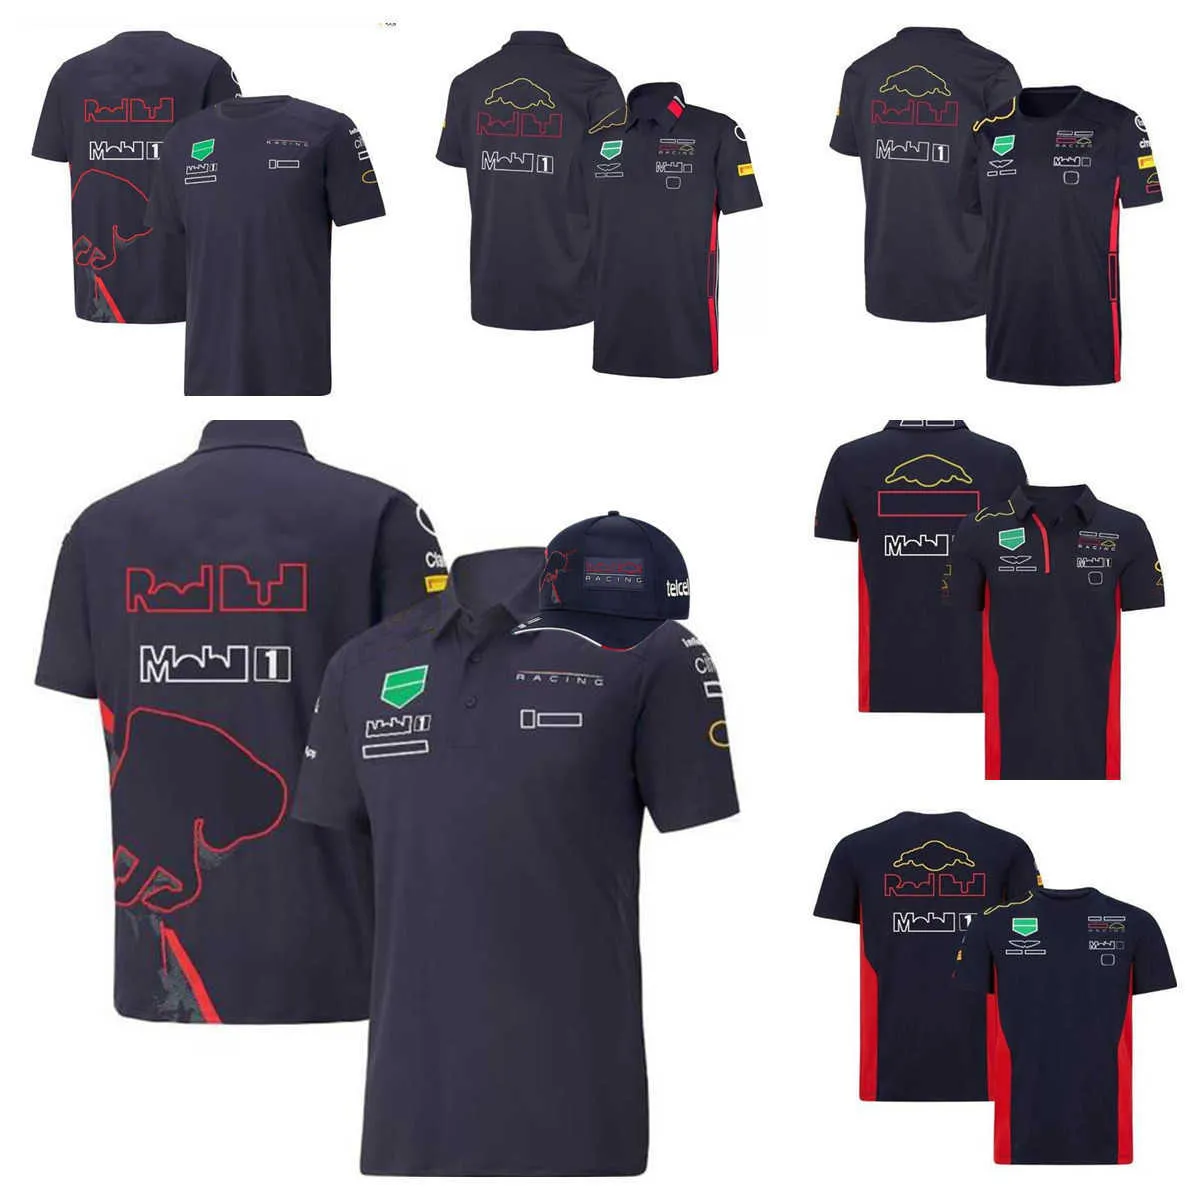 Cycluskleding F1 Formule 1 Racing Poloshirt Zomer T-shirt met korte mouwen en dezelfde weggeefhoed num 1 11 logo